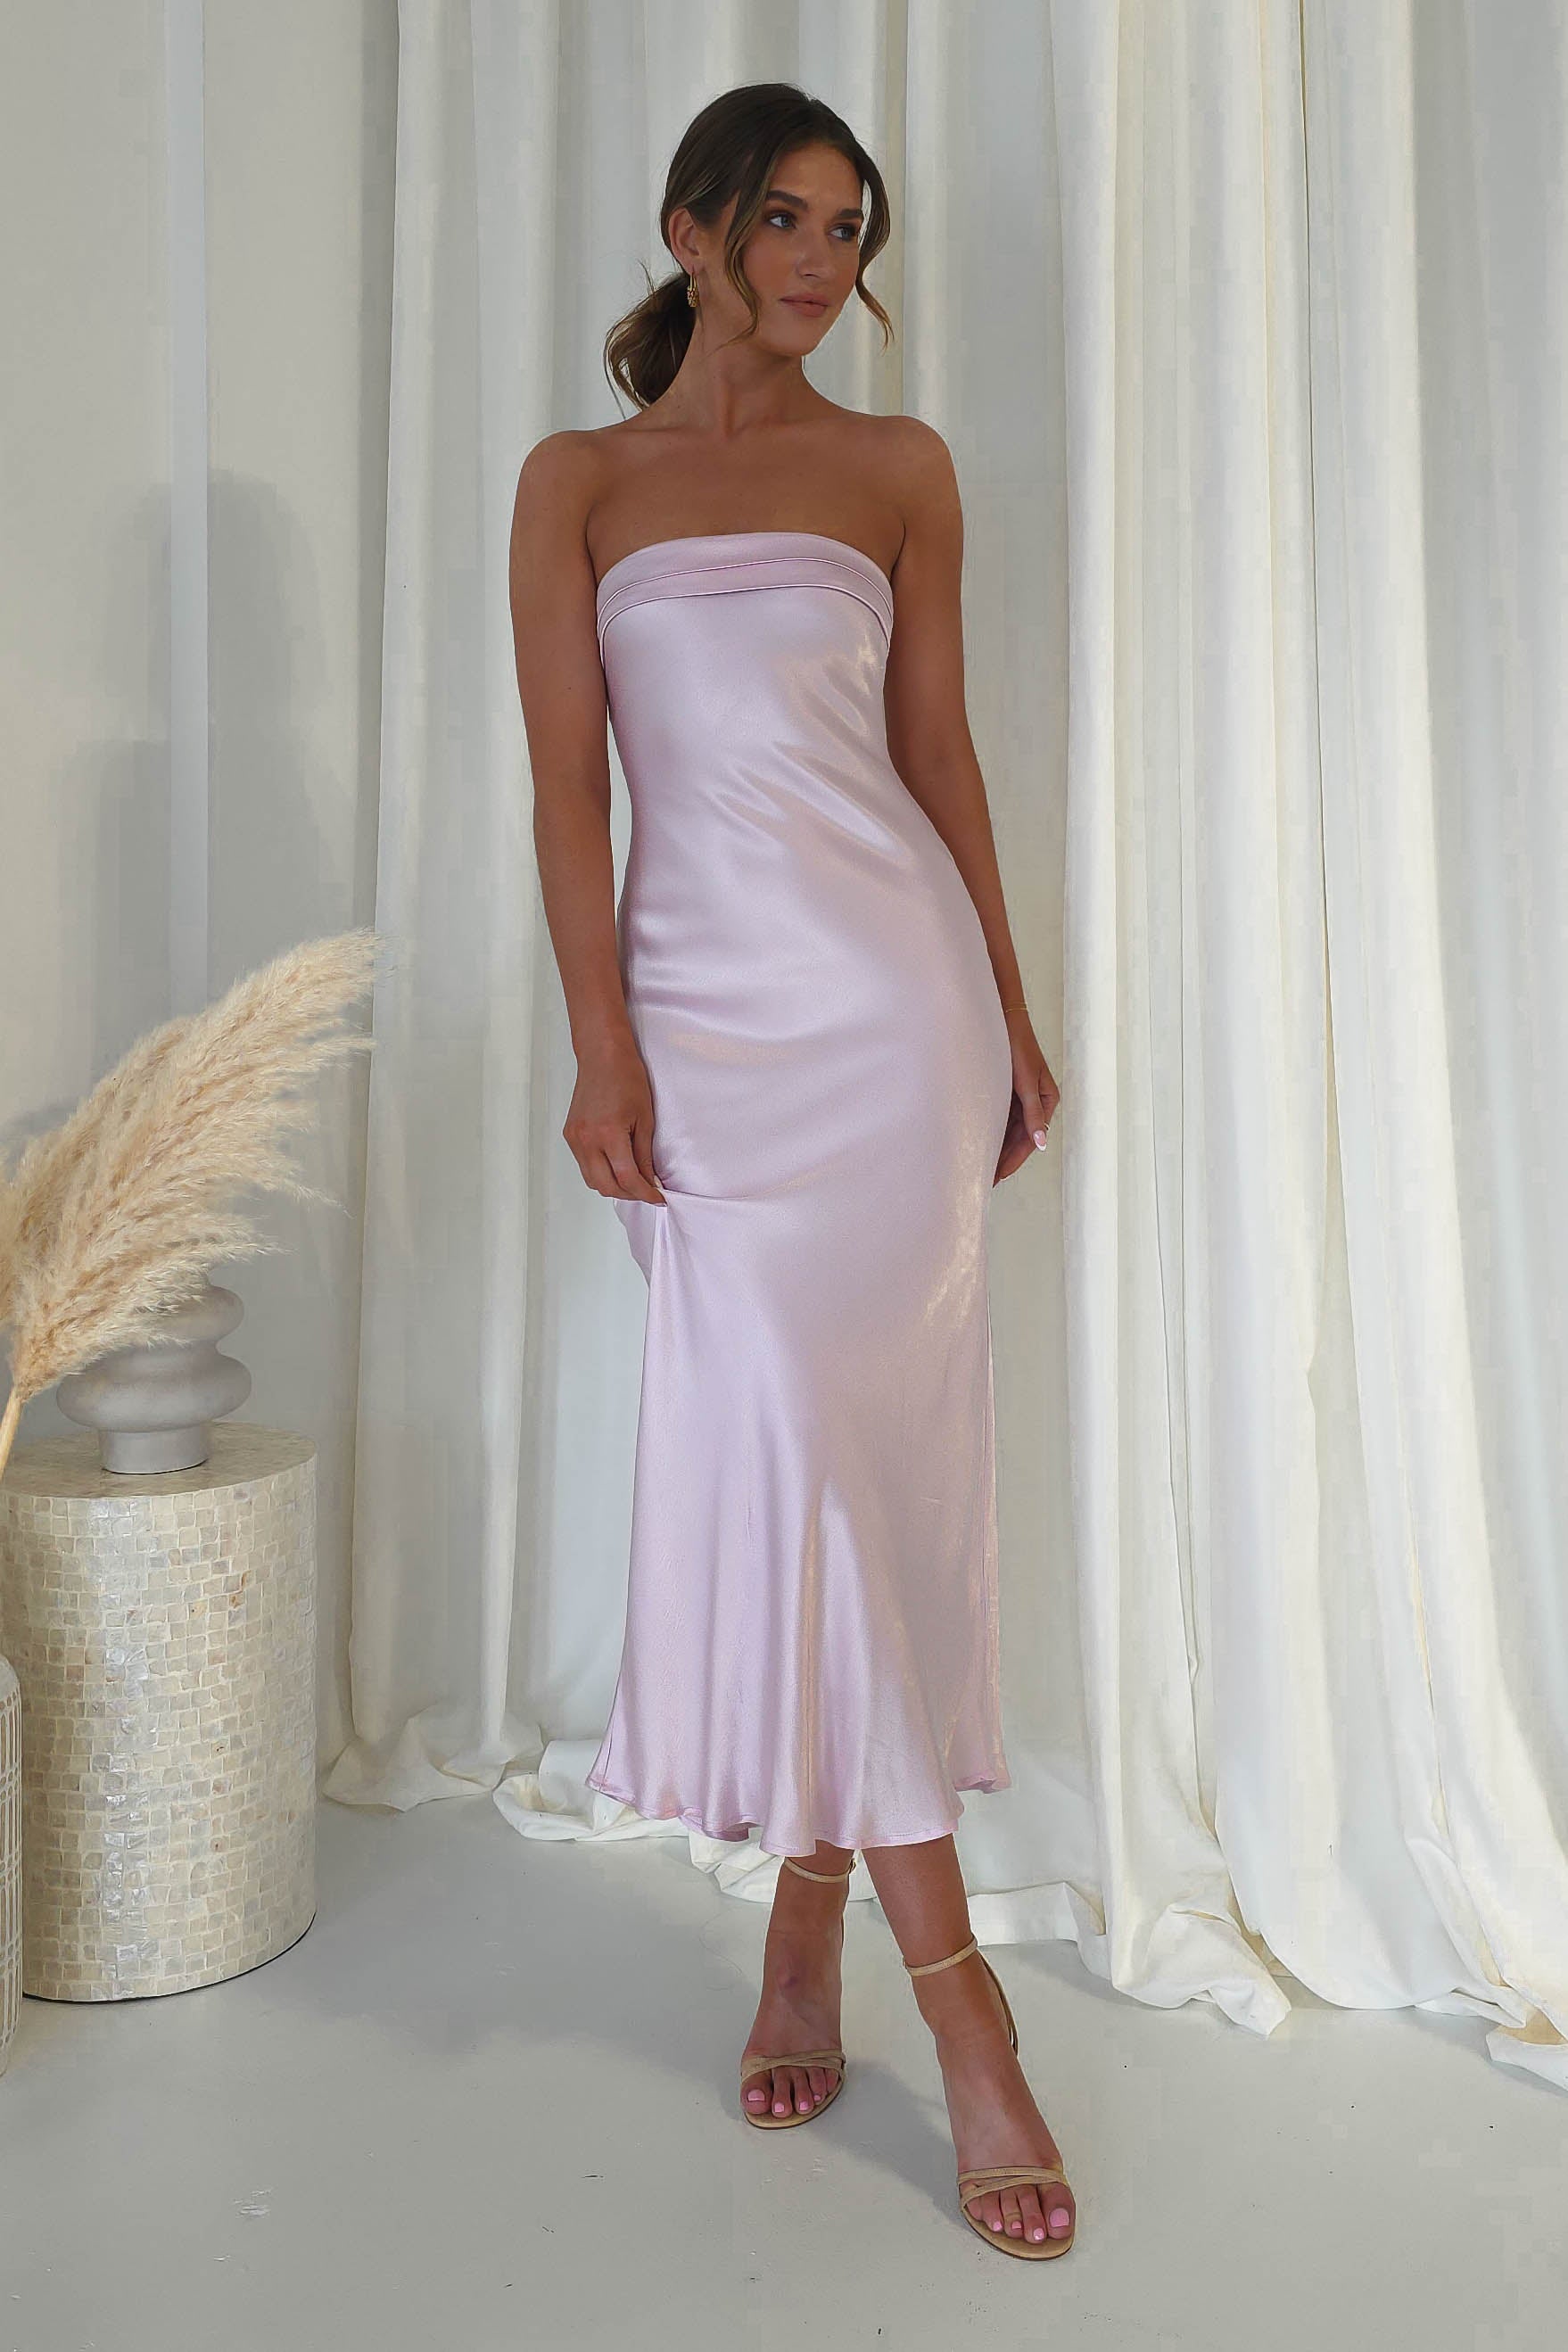 Silk slip dress - Pale pink